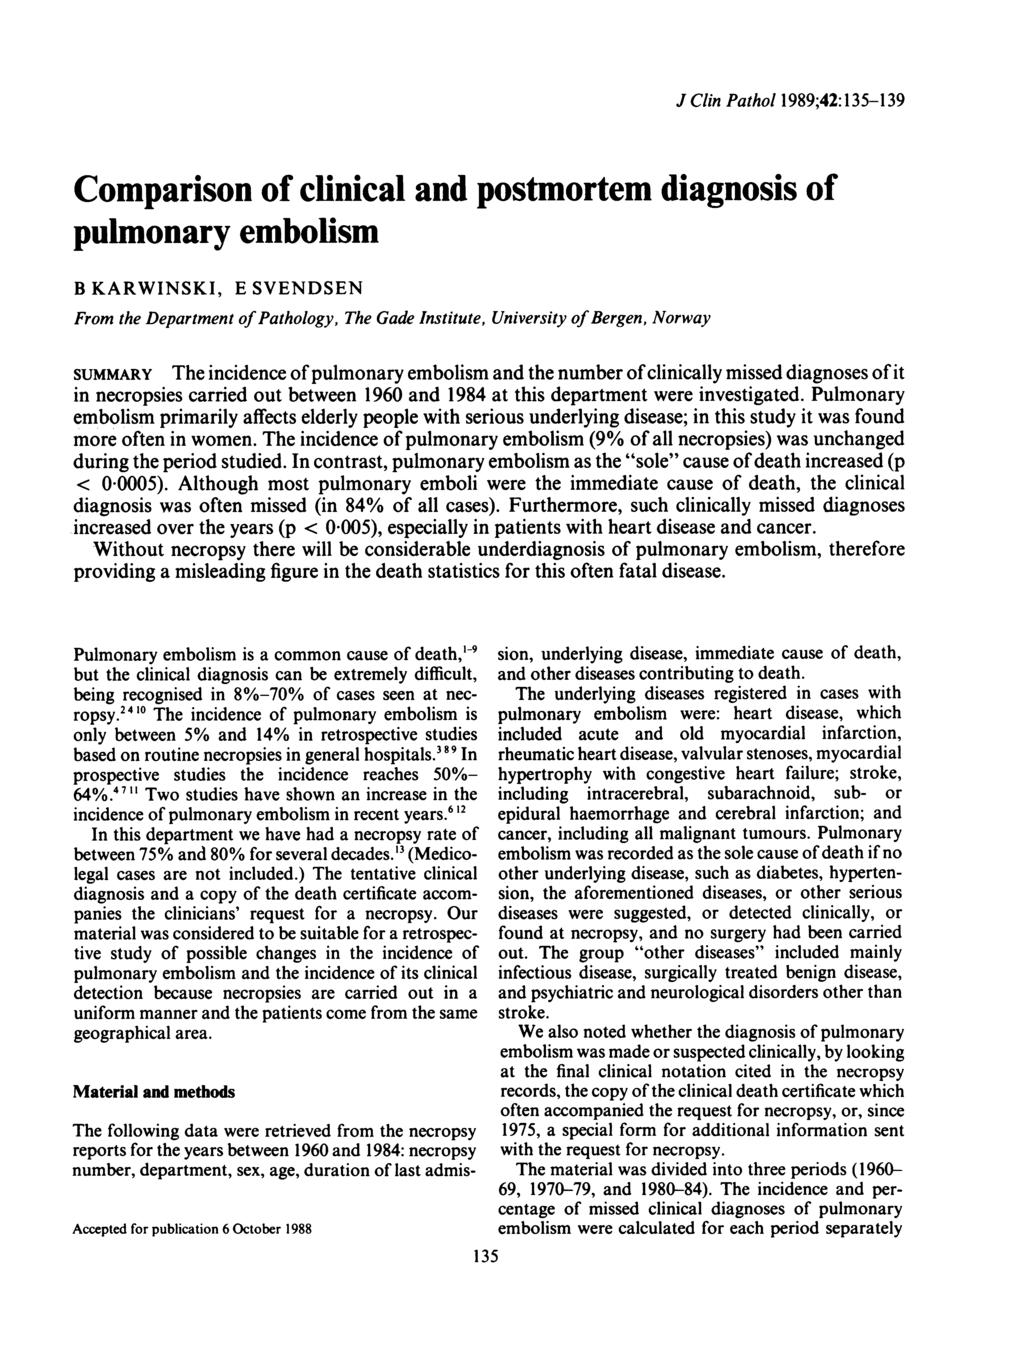 J Clin Pathol 1989;42:135-139 Comparison of clinical and postmortem diagnosis of pulmonary embolism B KARWINSKI, E SVENDSEN From the Department ofpathology, The Gade Institute, University of Bergen,